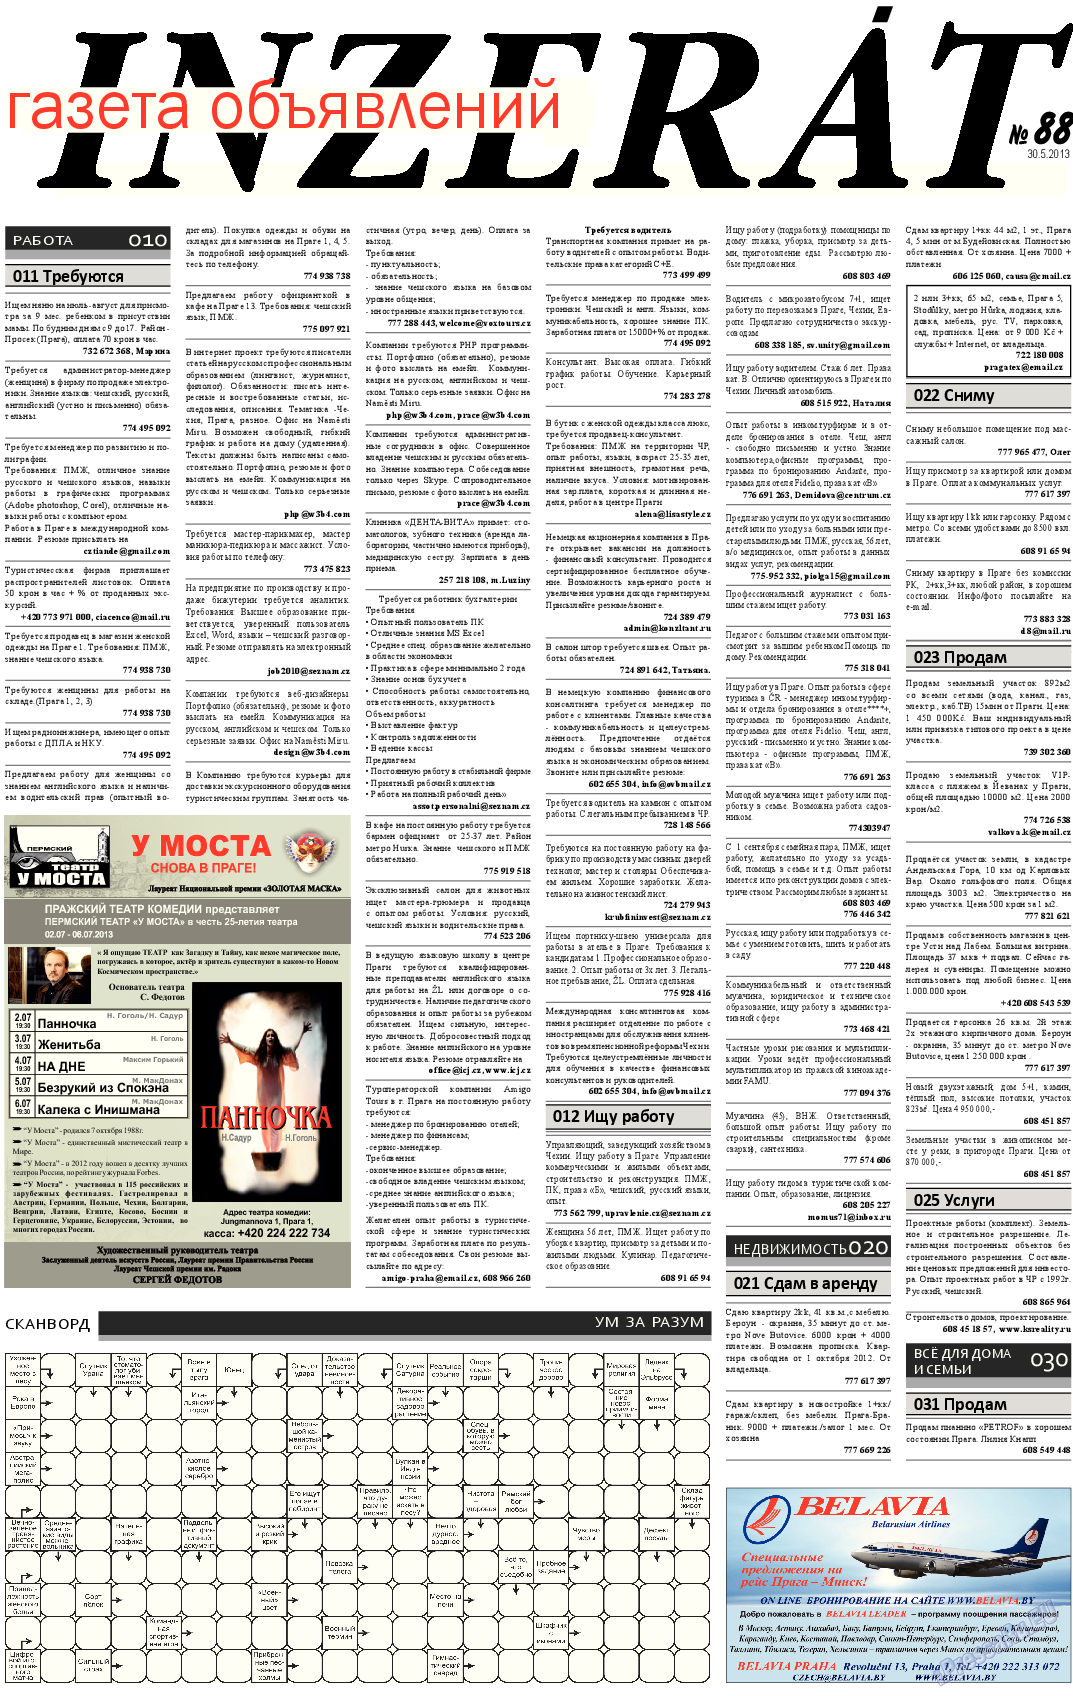 Пражский телеграф, газета. 2013 №21 стр.14